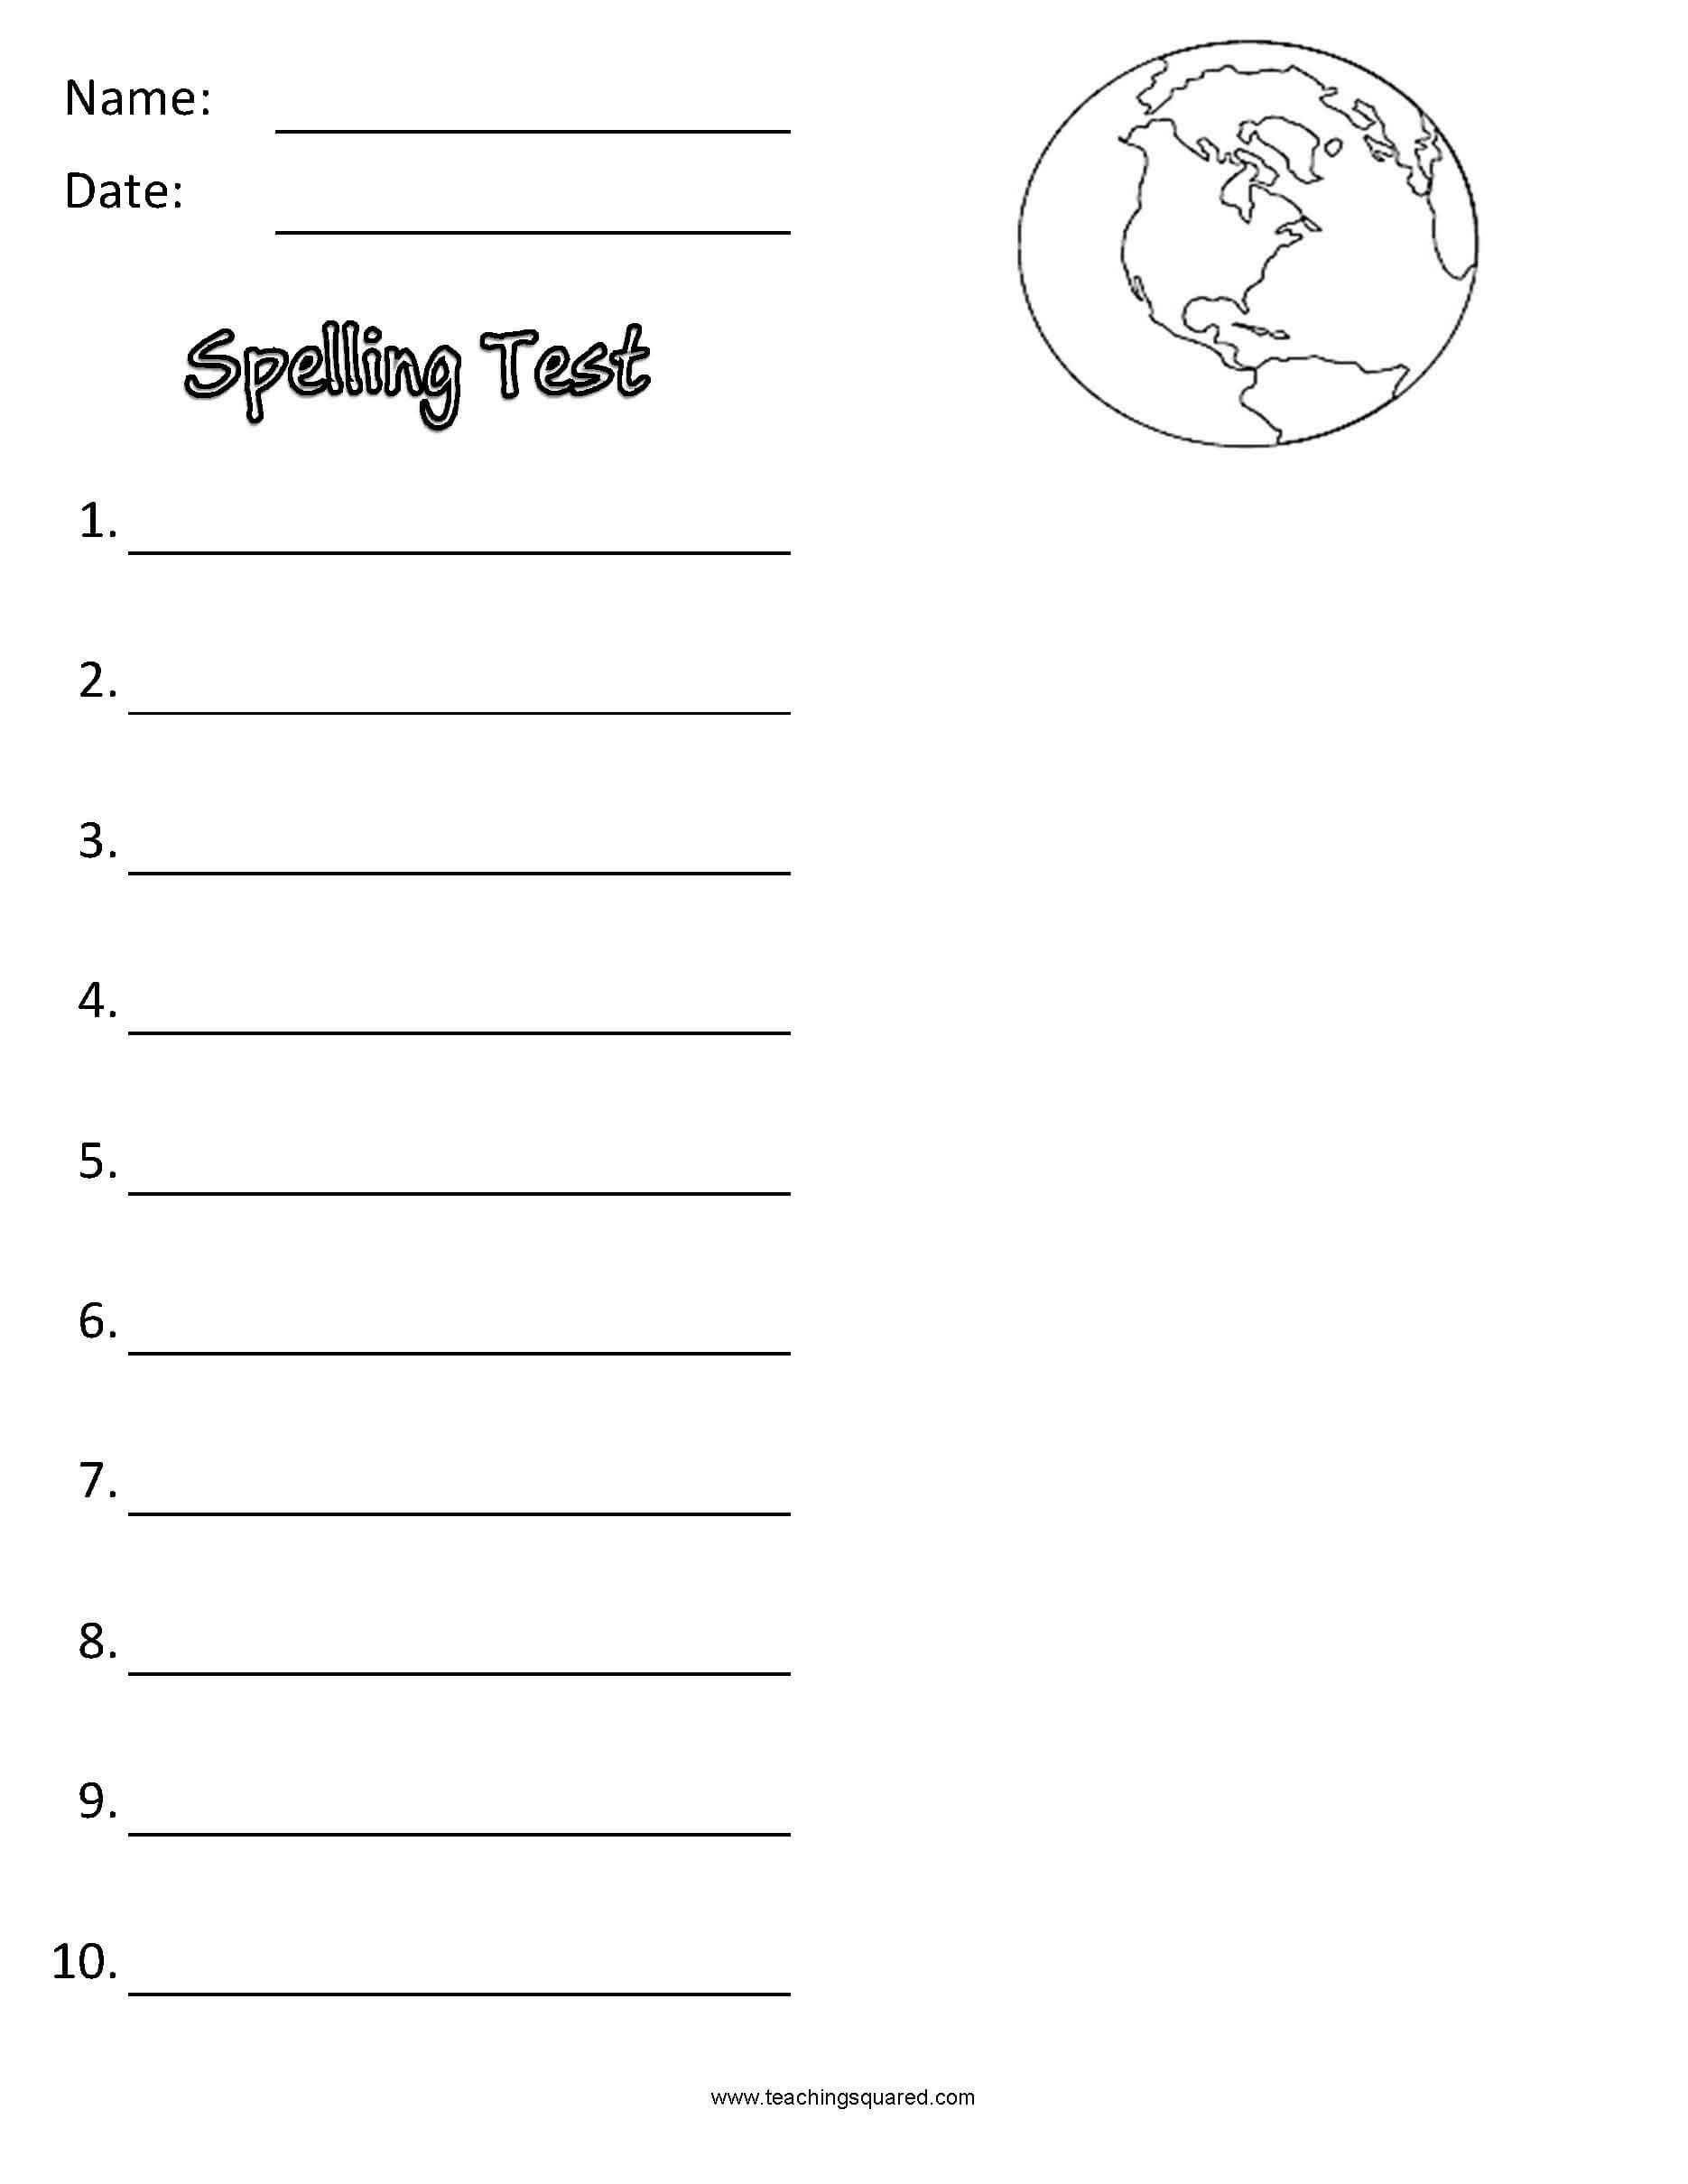 April Spelling Test Paper